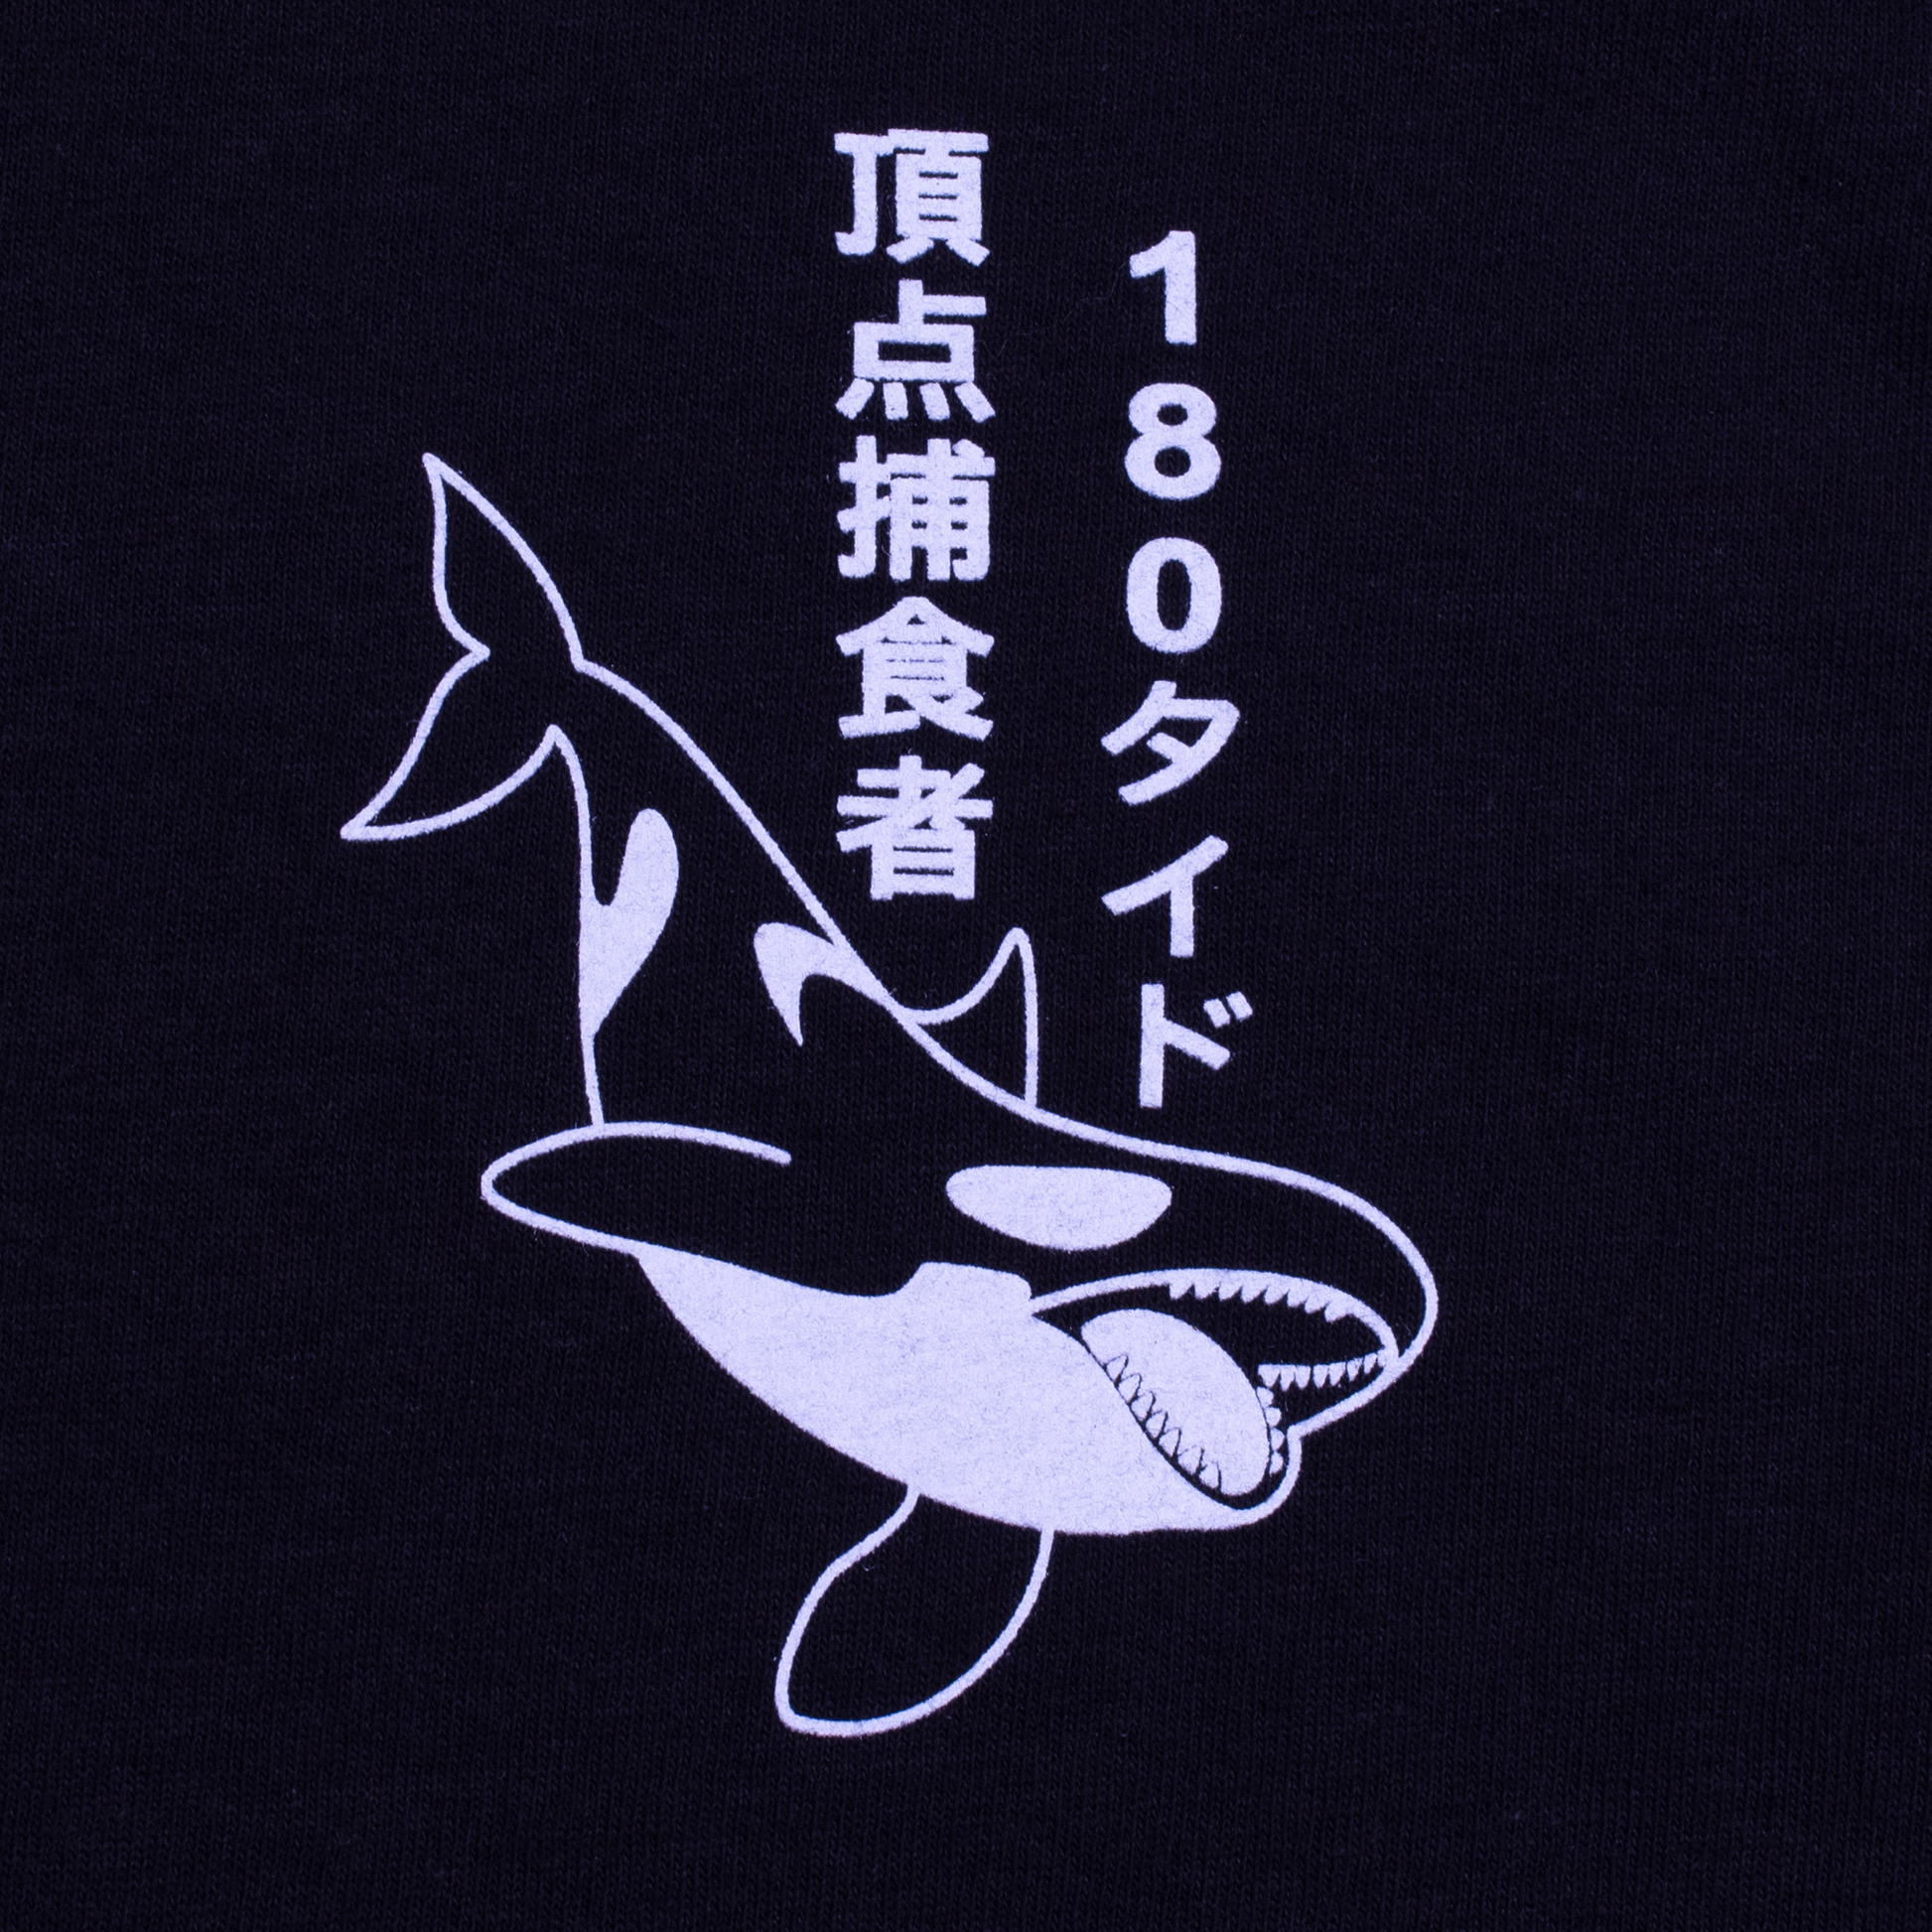 The Apex Predator, Orca Killer Whale Eats Sushi.